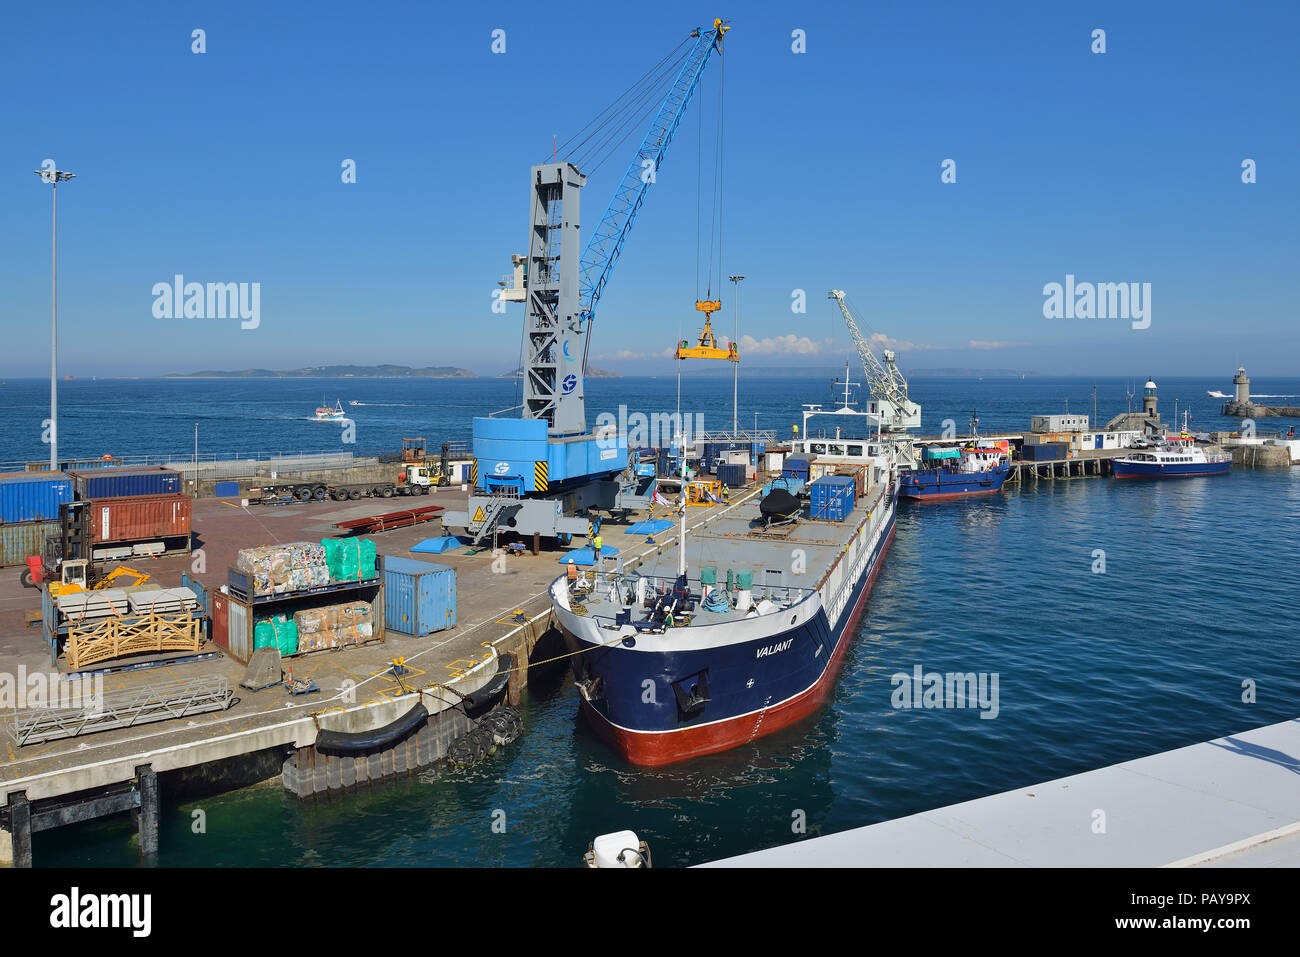 St Peter Port porto commerciale, Guernsey, Isole del Canale Isole britanniche Foto Stock